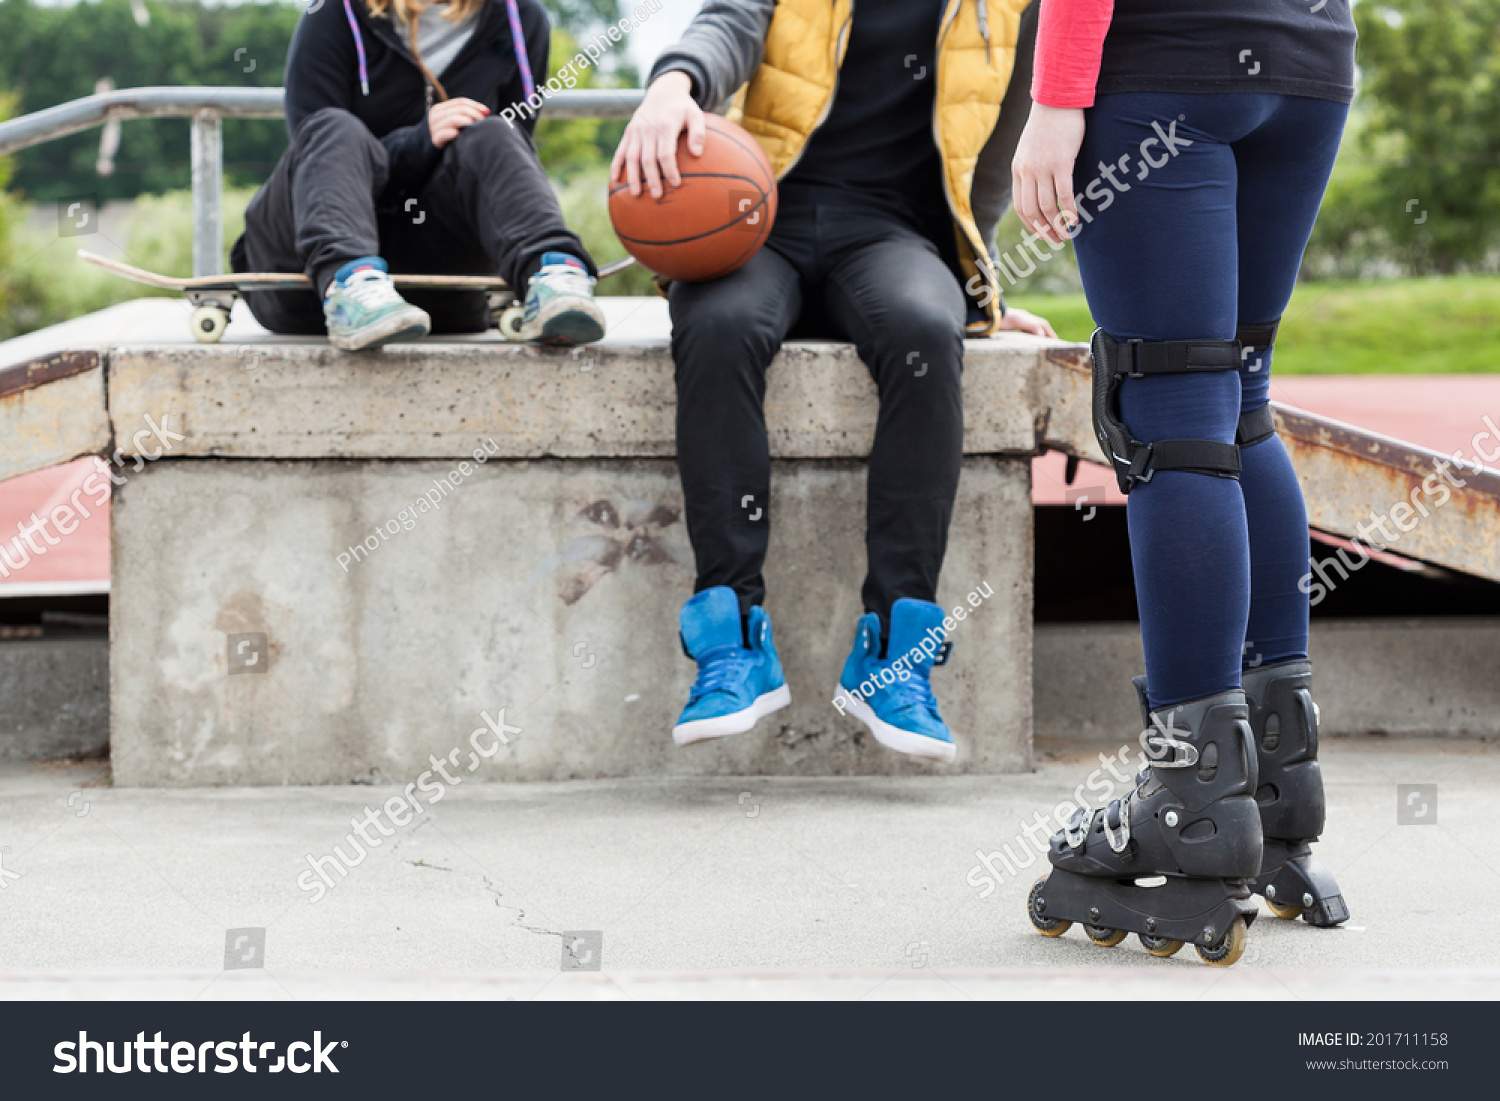 Roller skater boy Images, Stock Photos & Vectors | Shutterstock